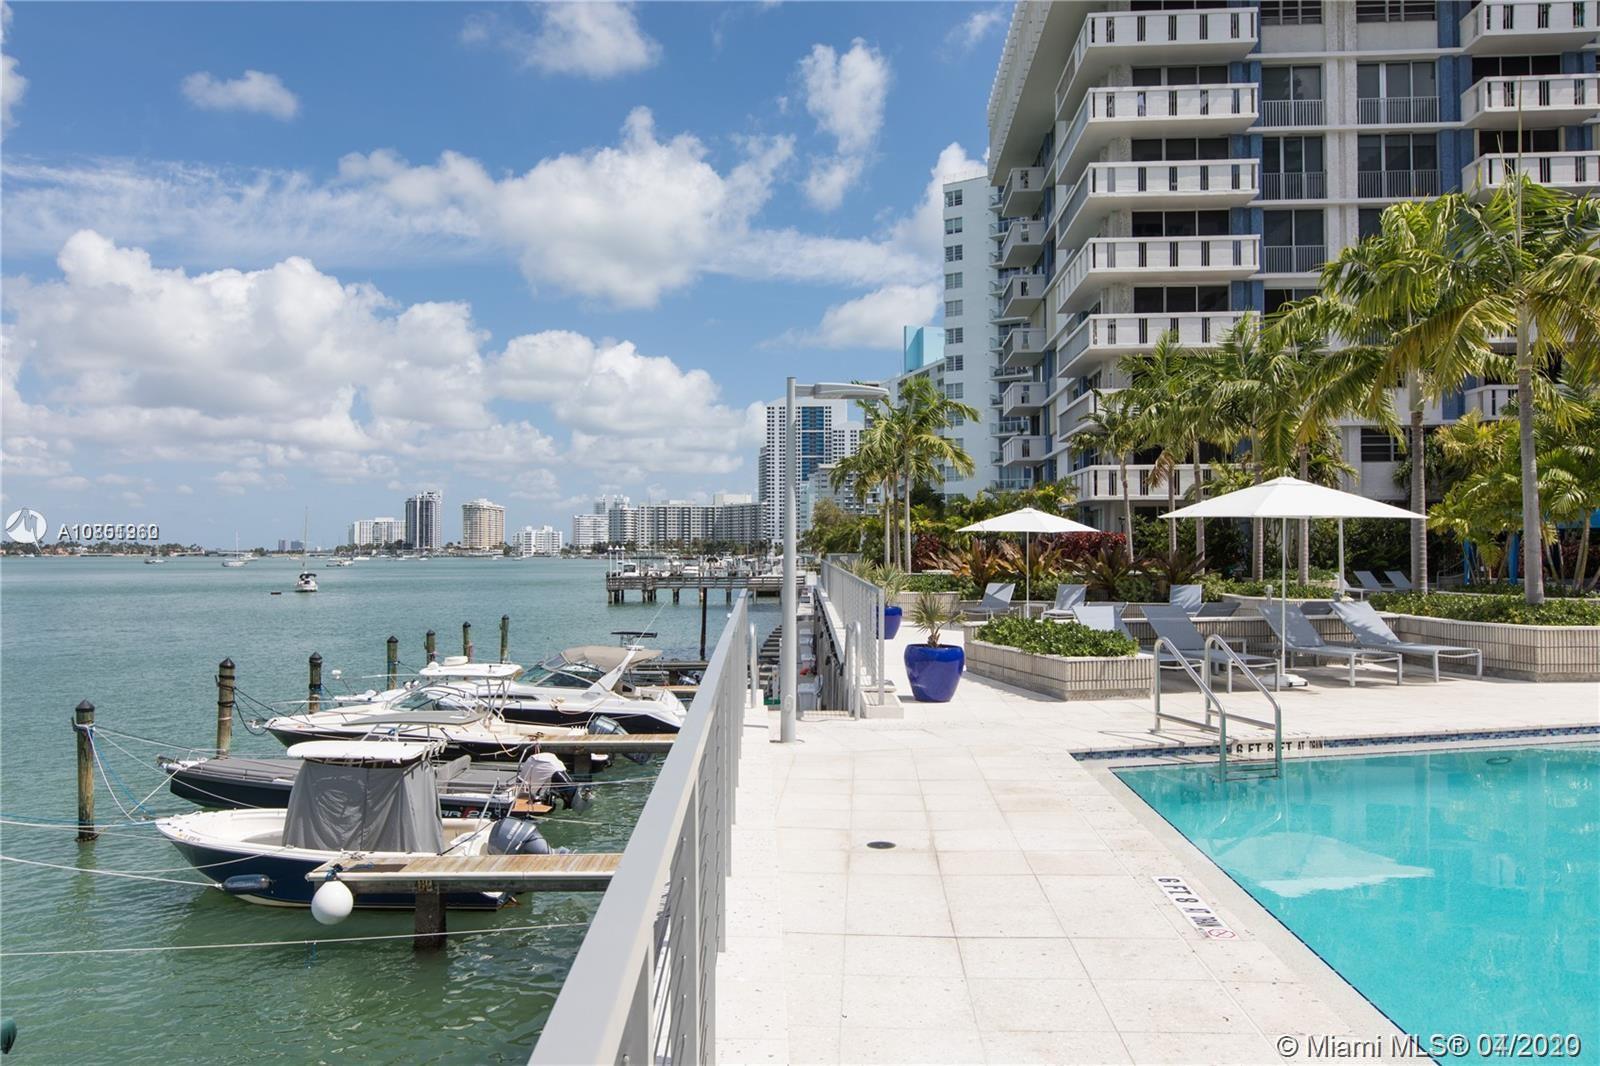 South Bay Club Unit #PH15 Condo for Sale in South Beach - Miami Beach